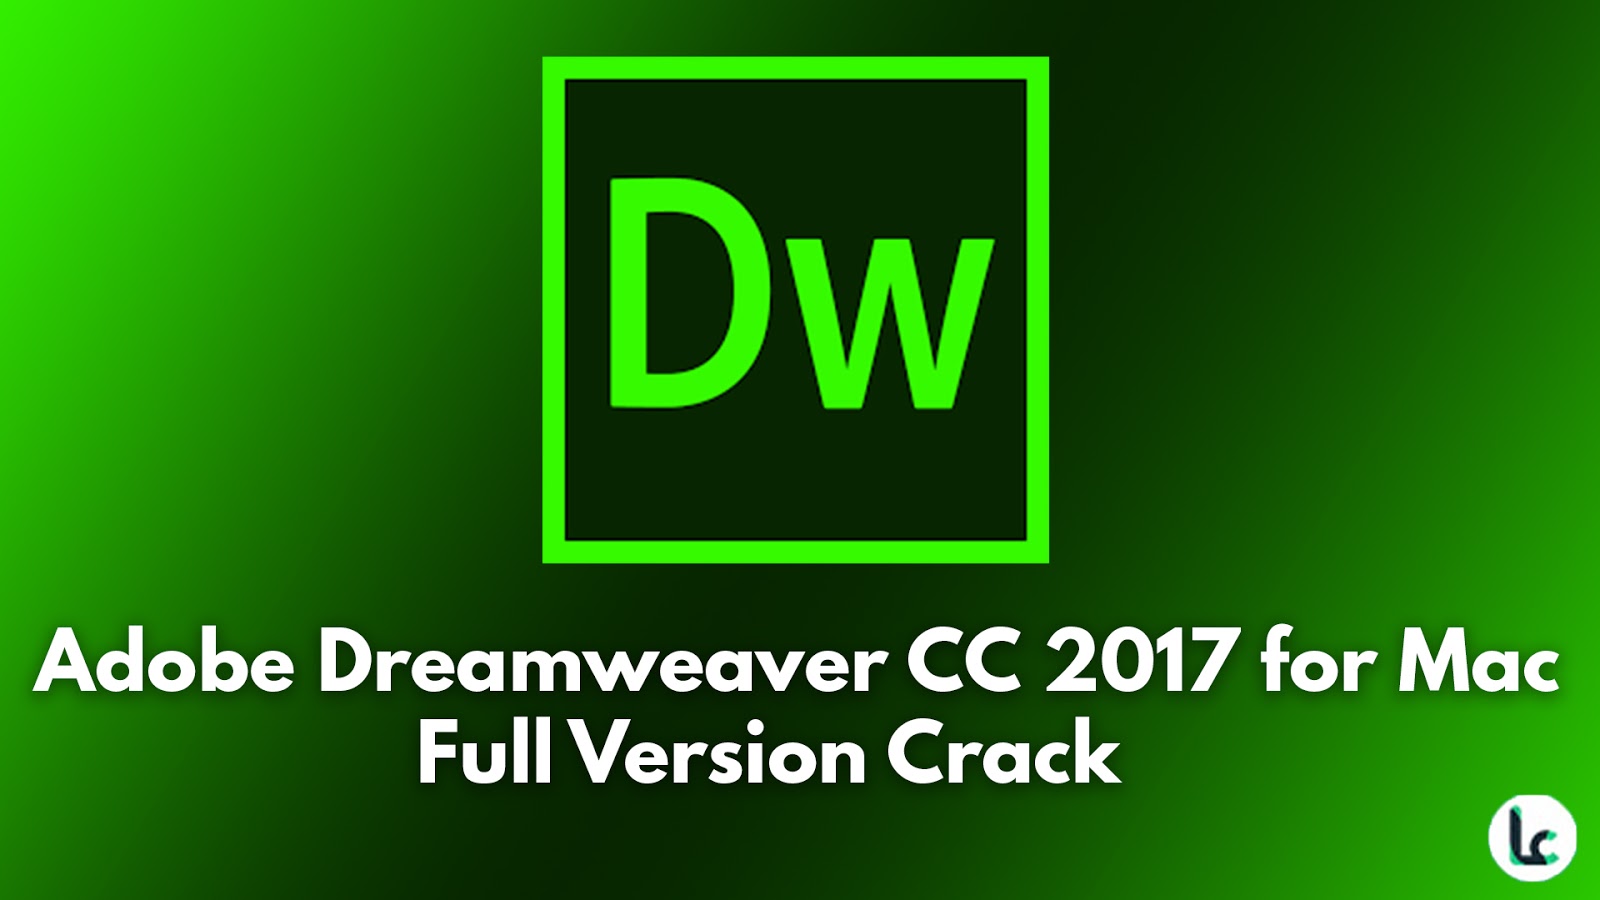 Adobe dreamweaver cc 2017 17.5.0.9878 for mac